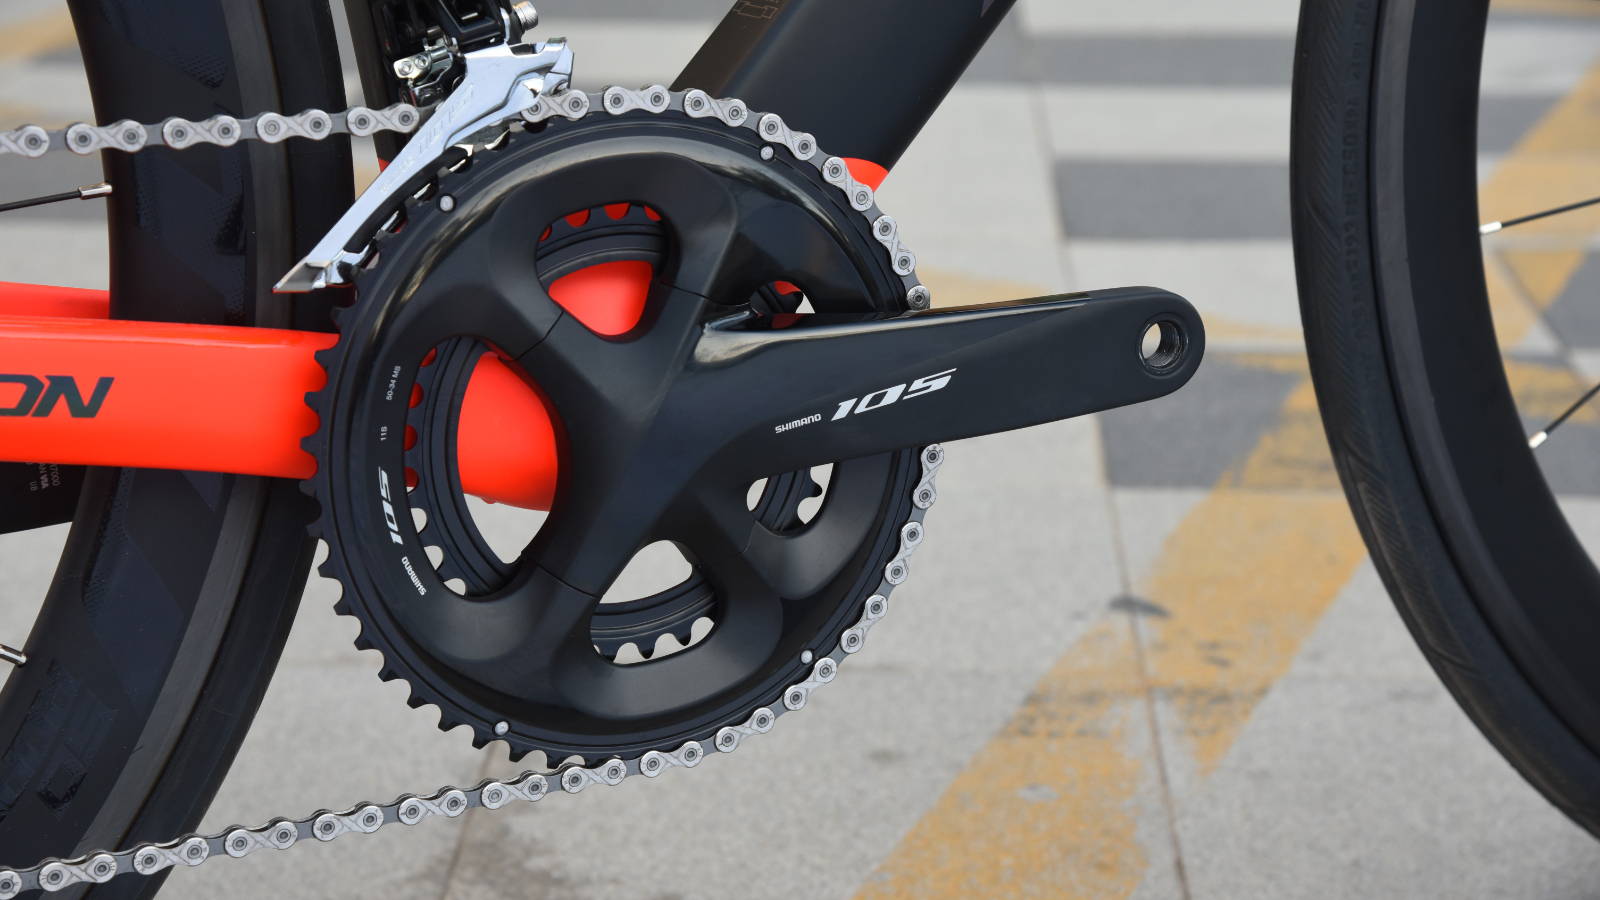 Shimano 105 crankset-sava r09 carbon fiber road bike with shimano 105 r7000 groupset